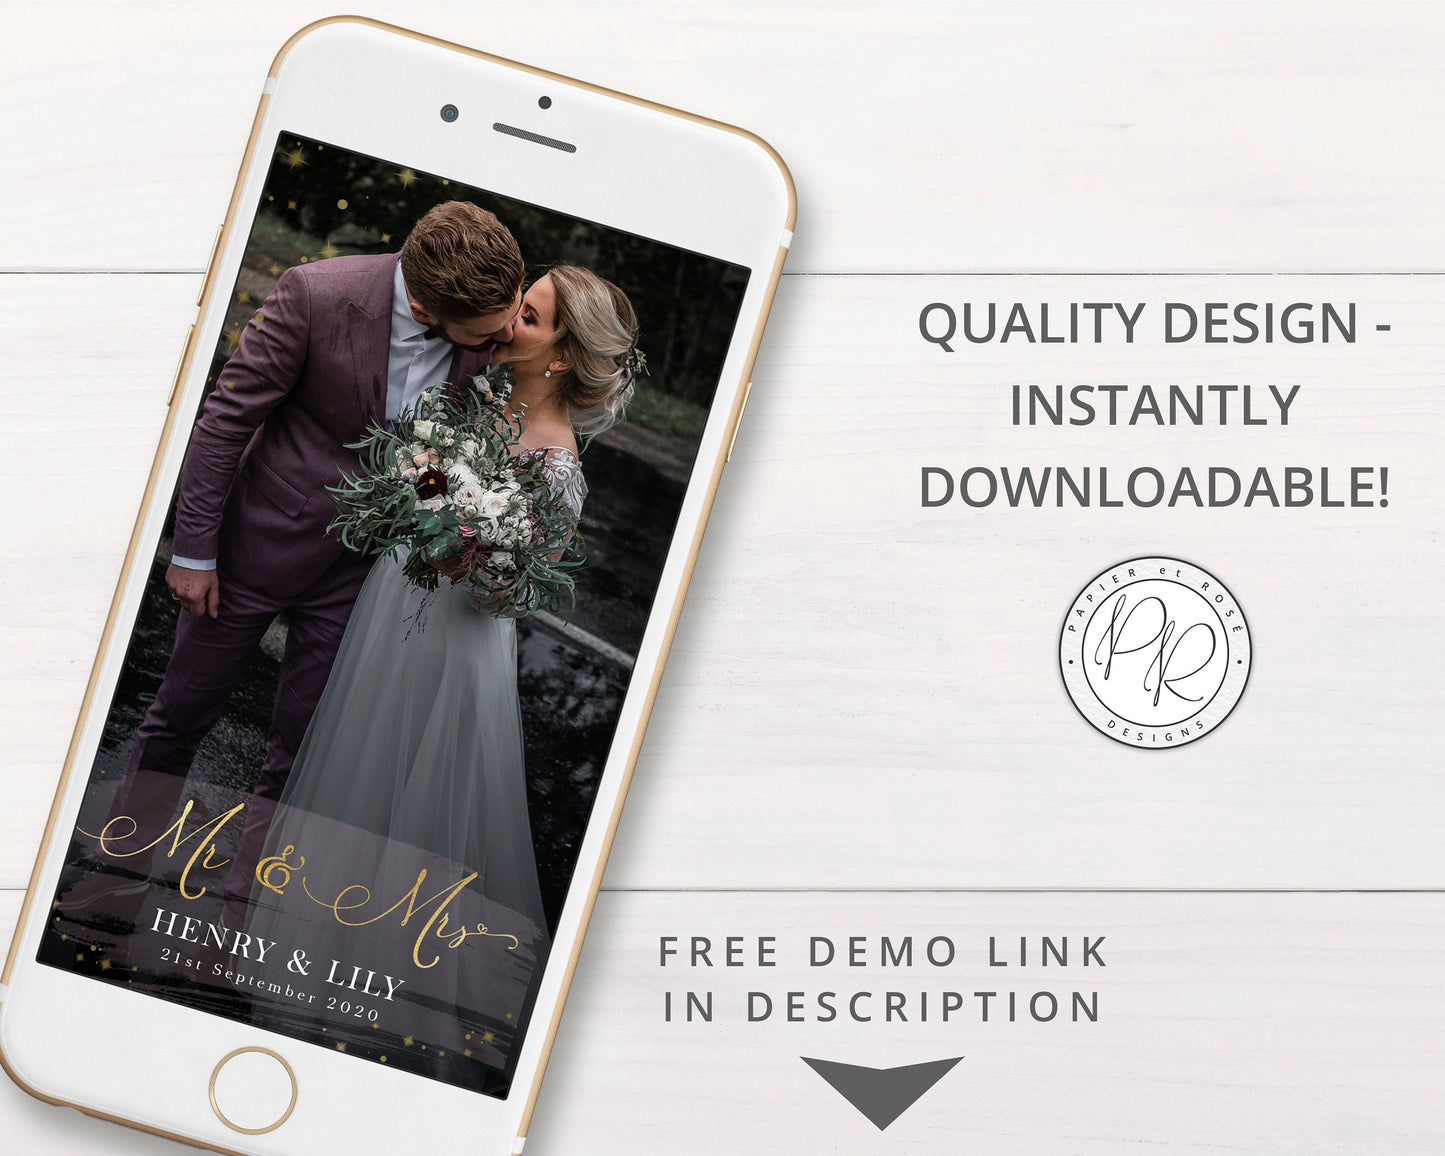 DIY Instant Edit Snapchat Geofilter Elegant Wedding | Editable Snapchat Geofilter | Event Editable Template - PRG001